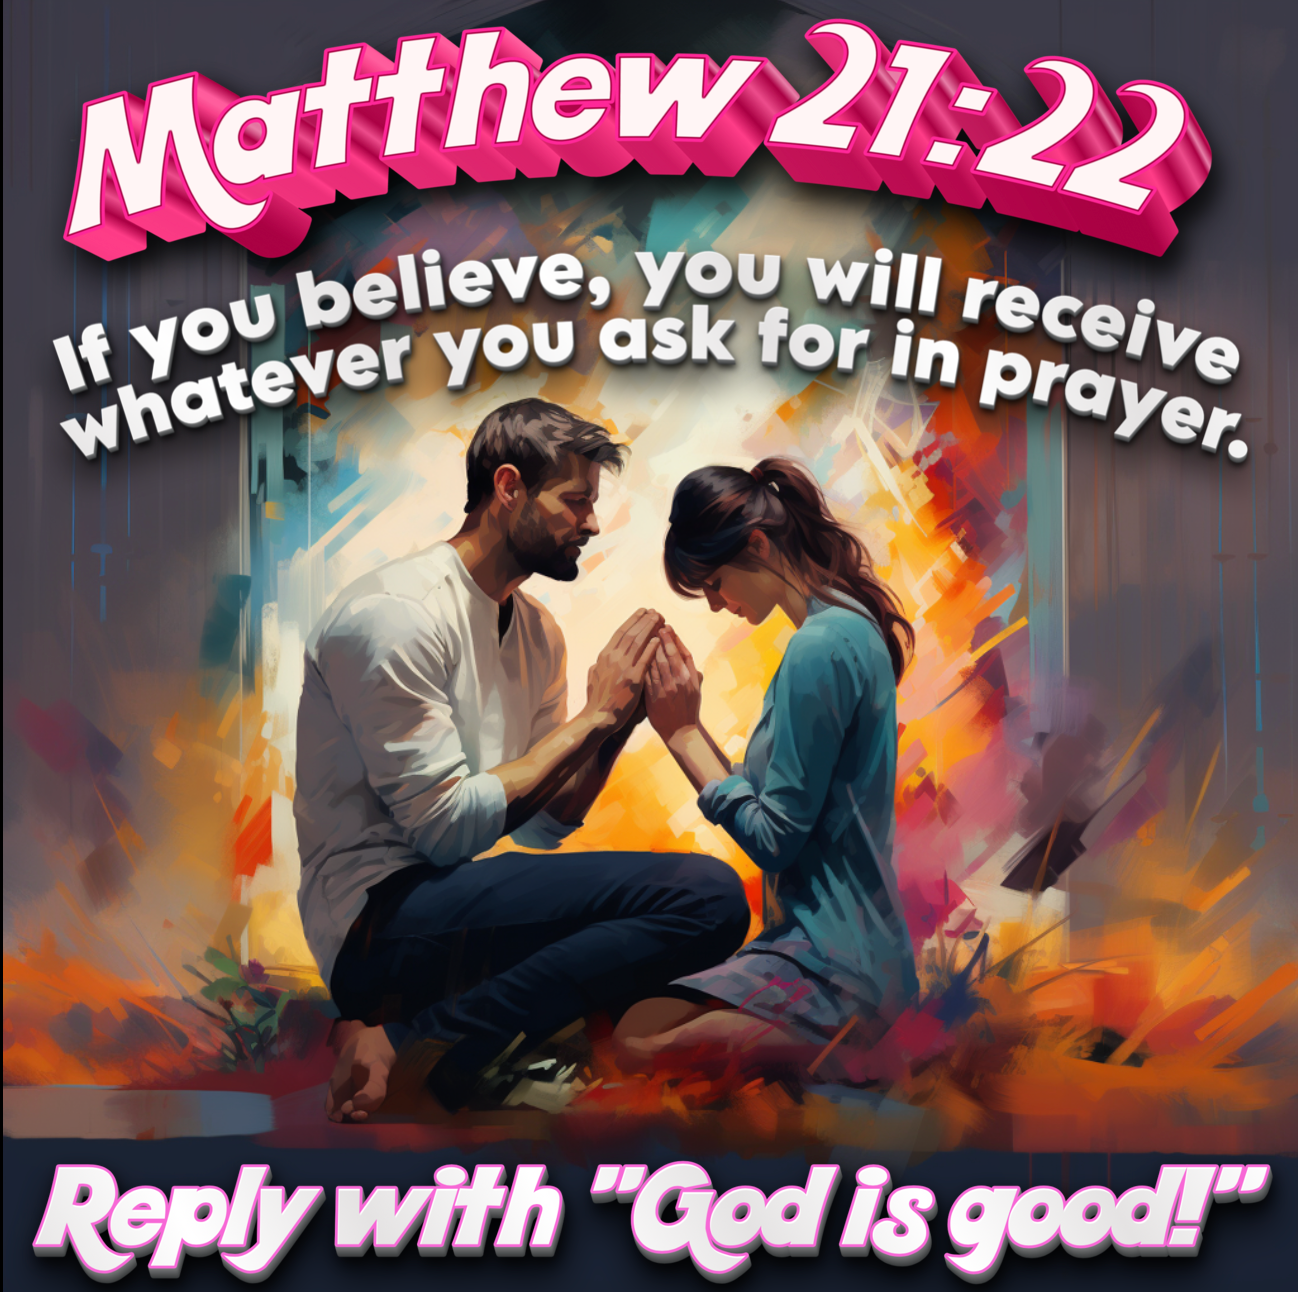 Matthew 21:22 Bible Verse Shirt. Receive Whatever You Ask for in Prayer.